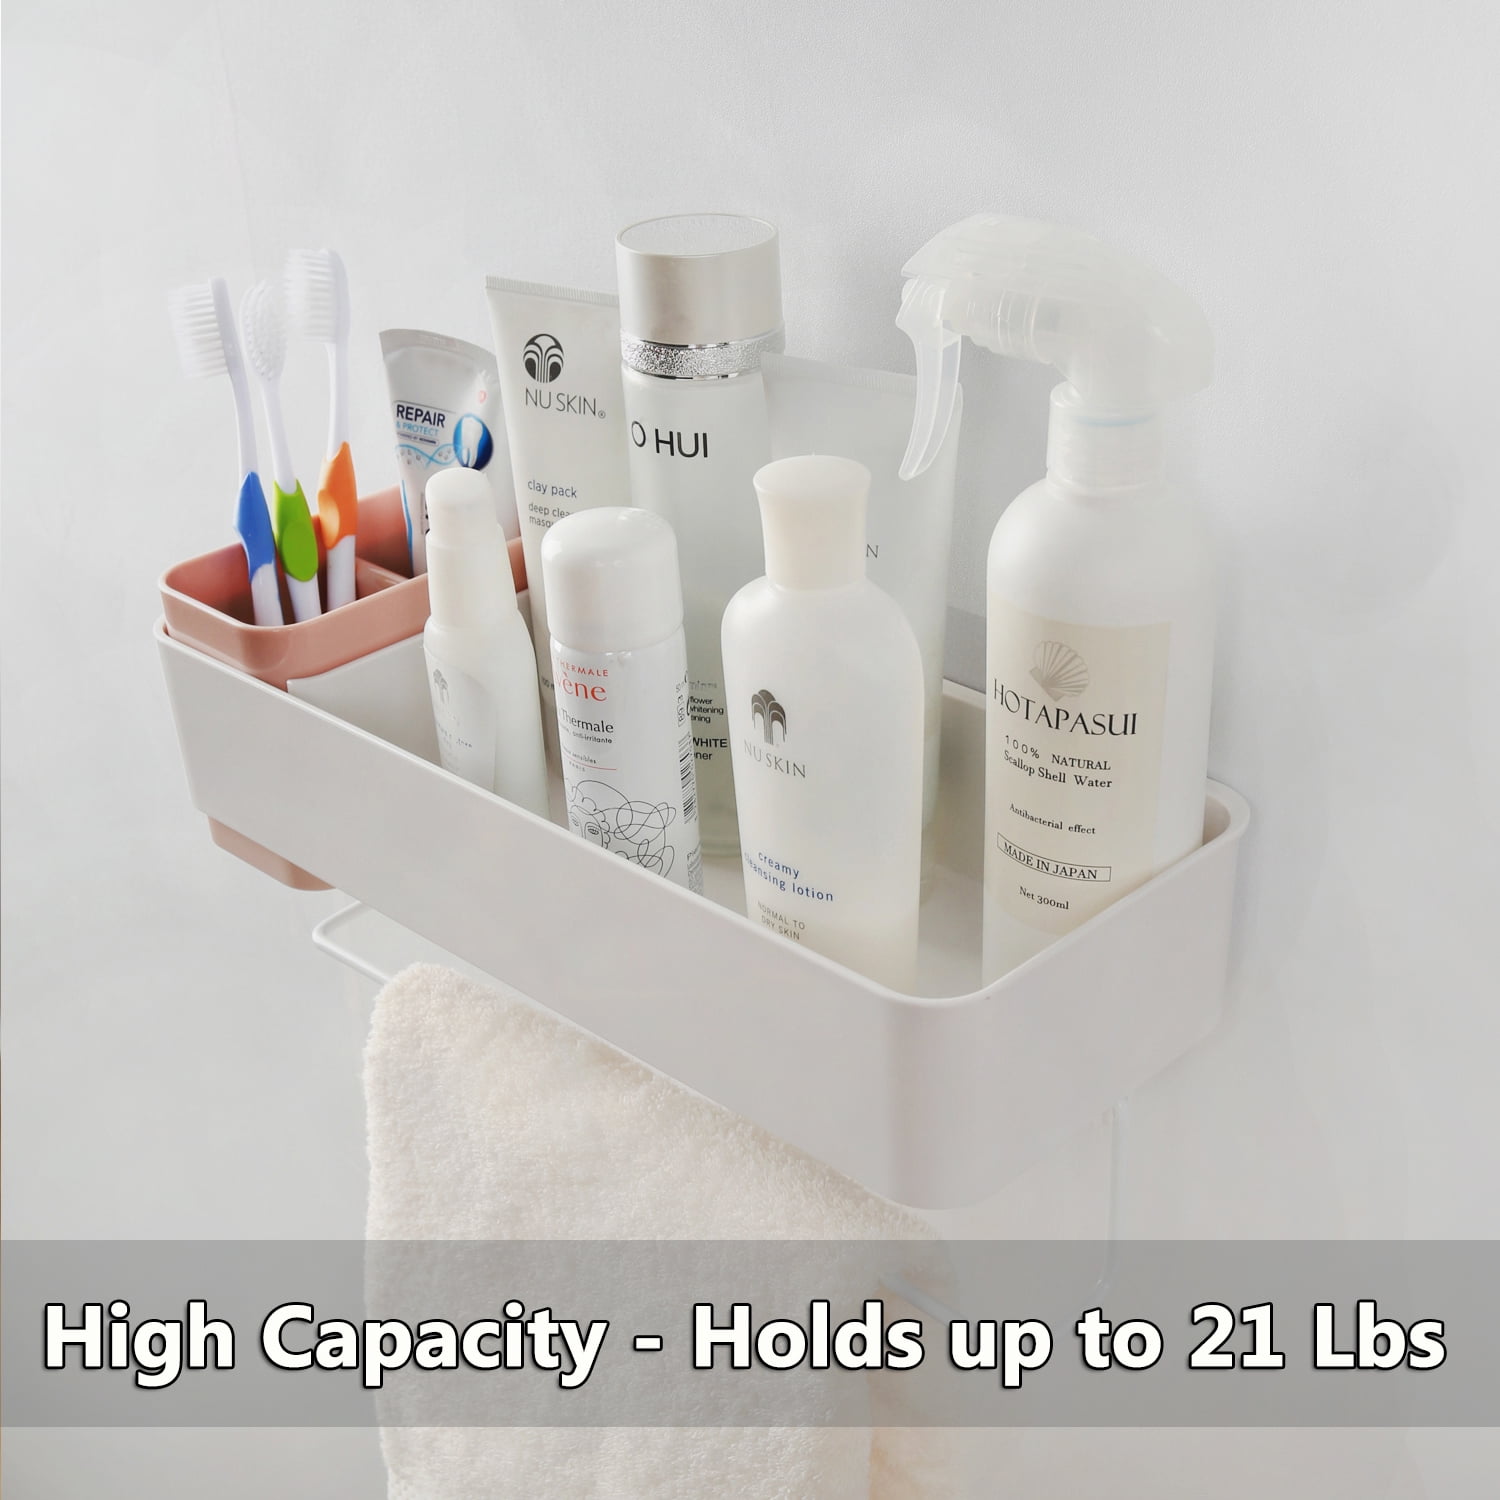 MORNITE Bathroom Wall Organizer Shelf Storage Adhesive, Small Apartment  Restroom Essentials Shower Caddy Suction Green